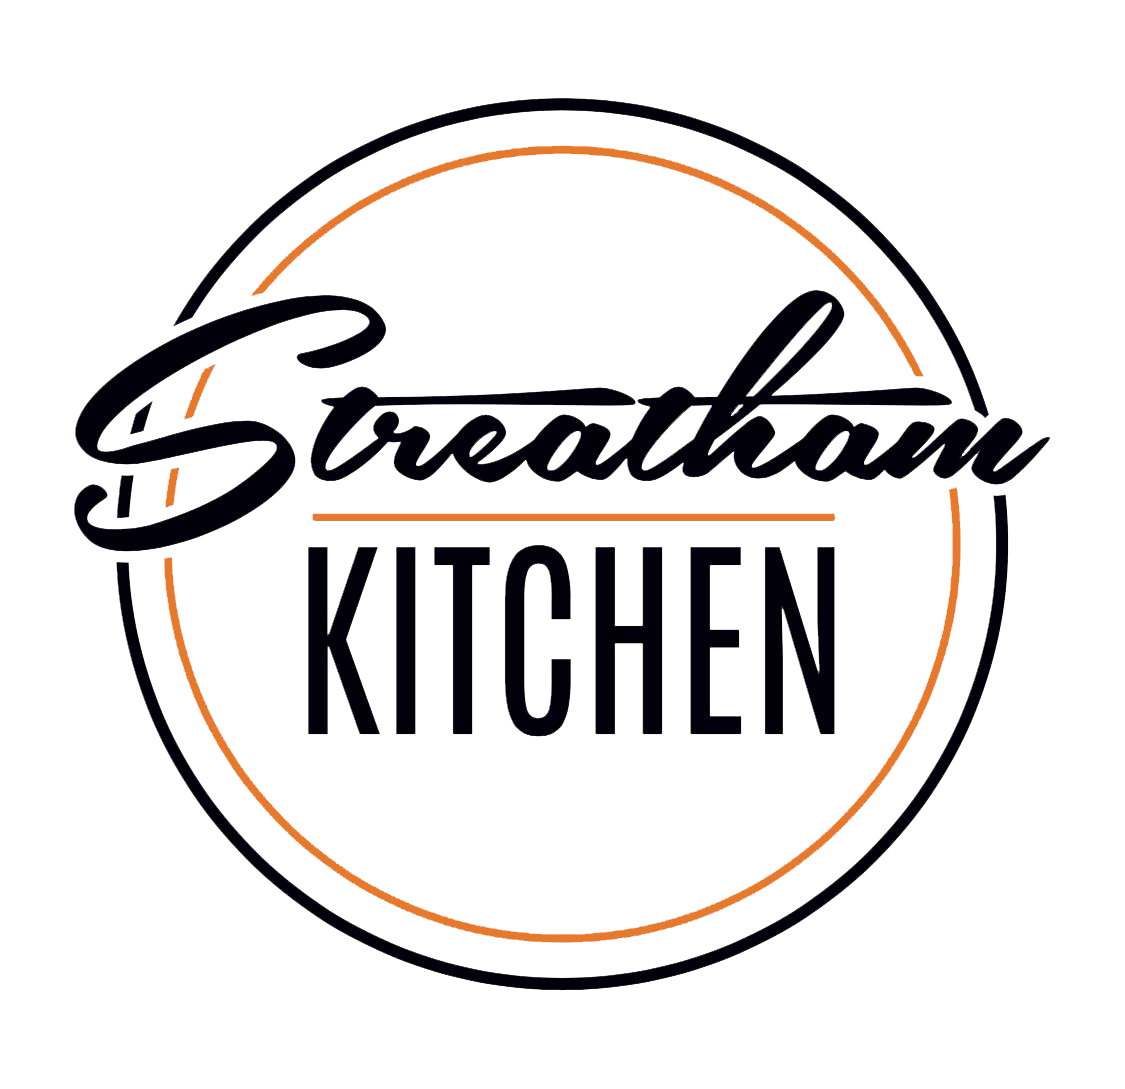 Streatham Kitchen